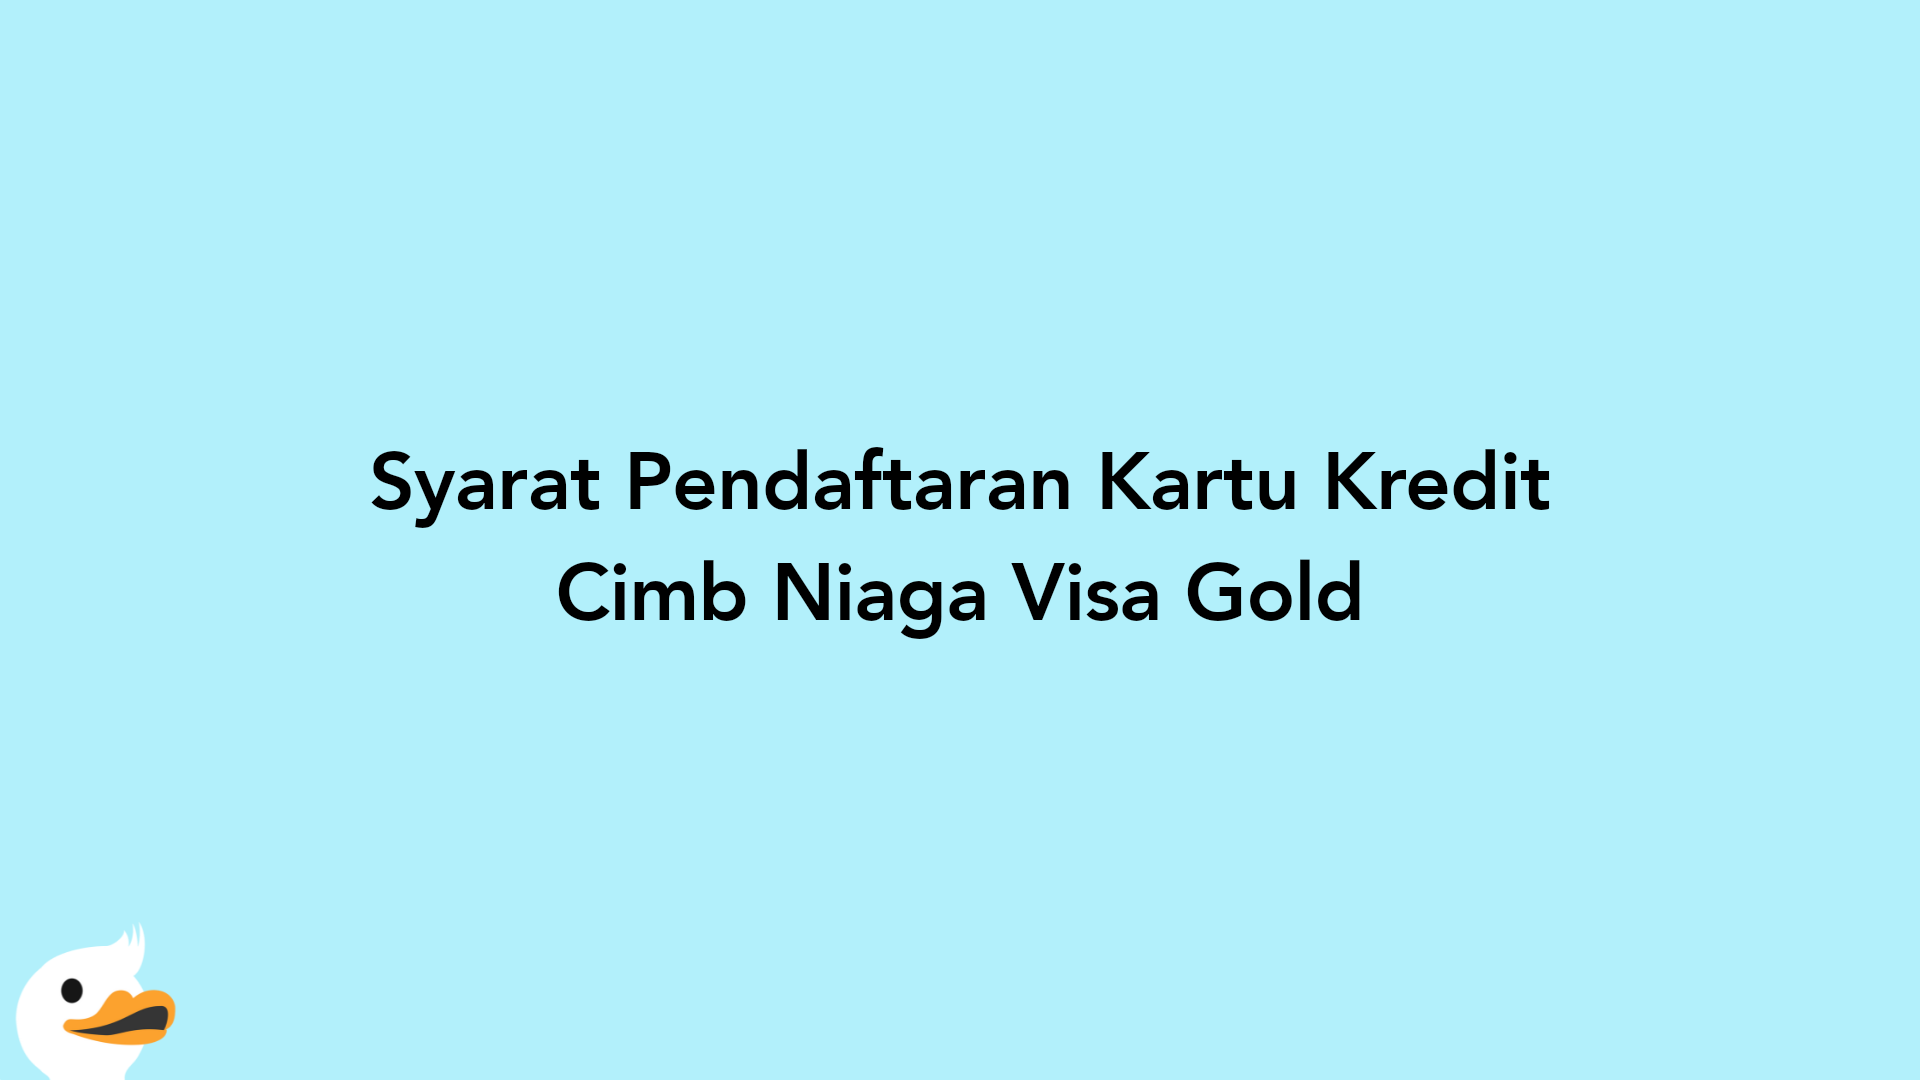 Syarat Pendaftaran Kartu Kredit Cimb Niaga Visa Gold